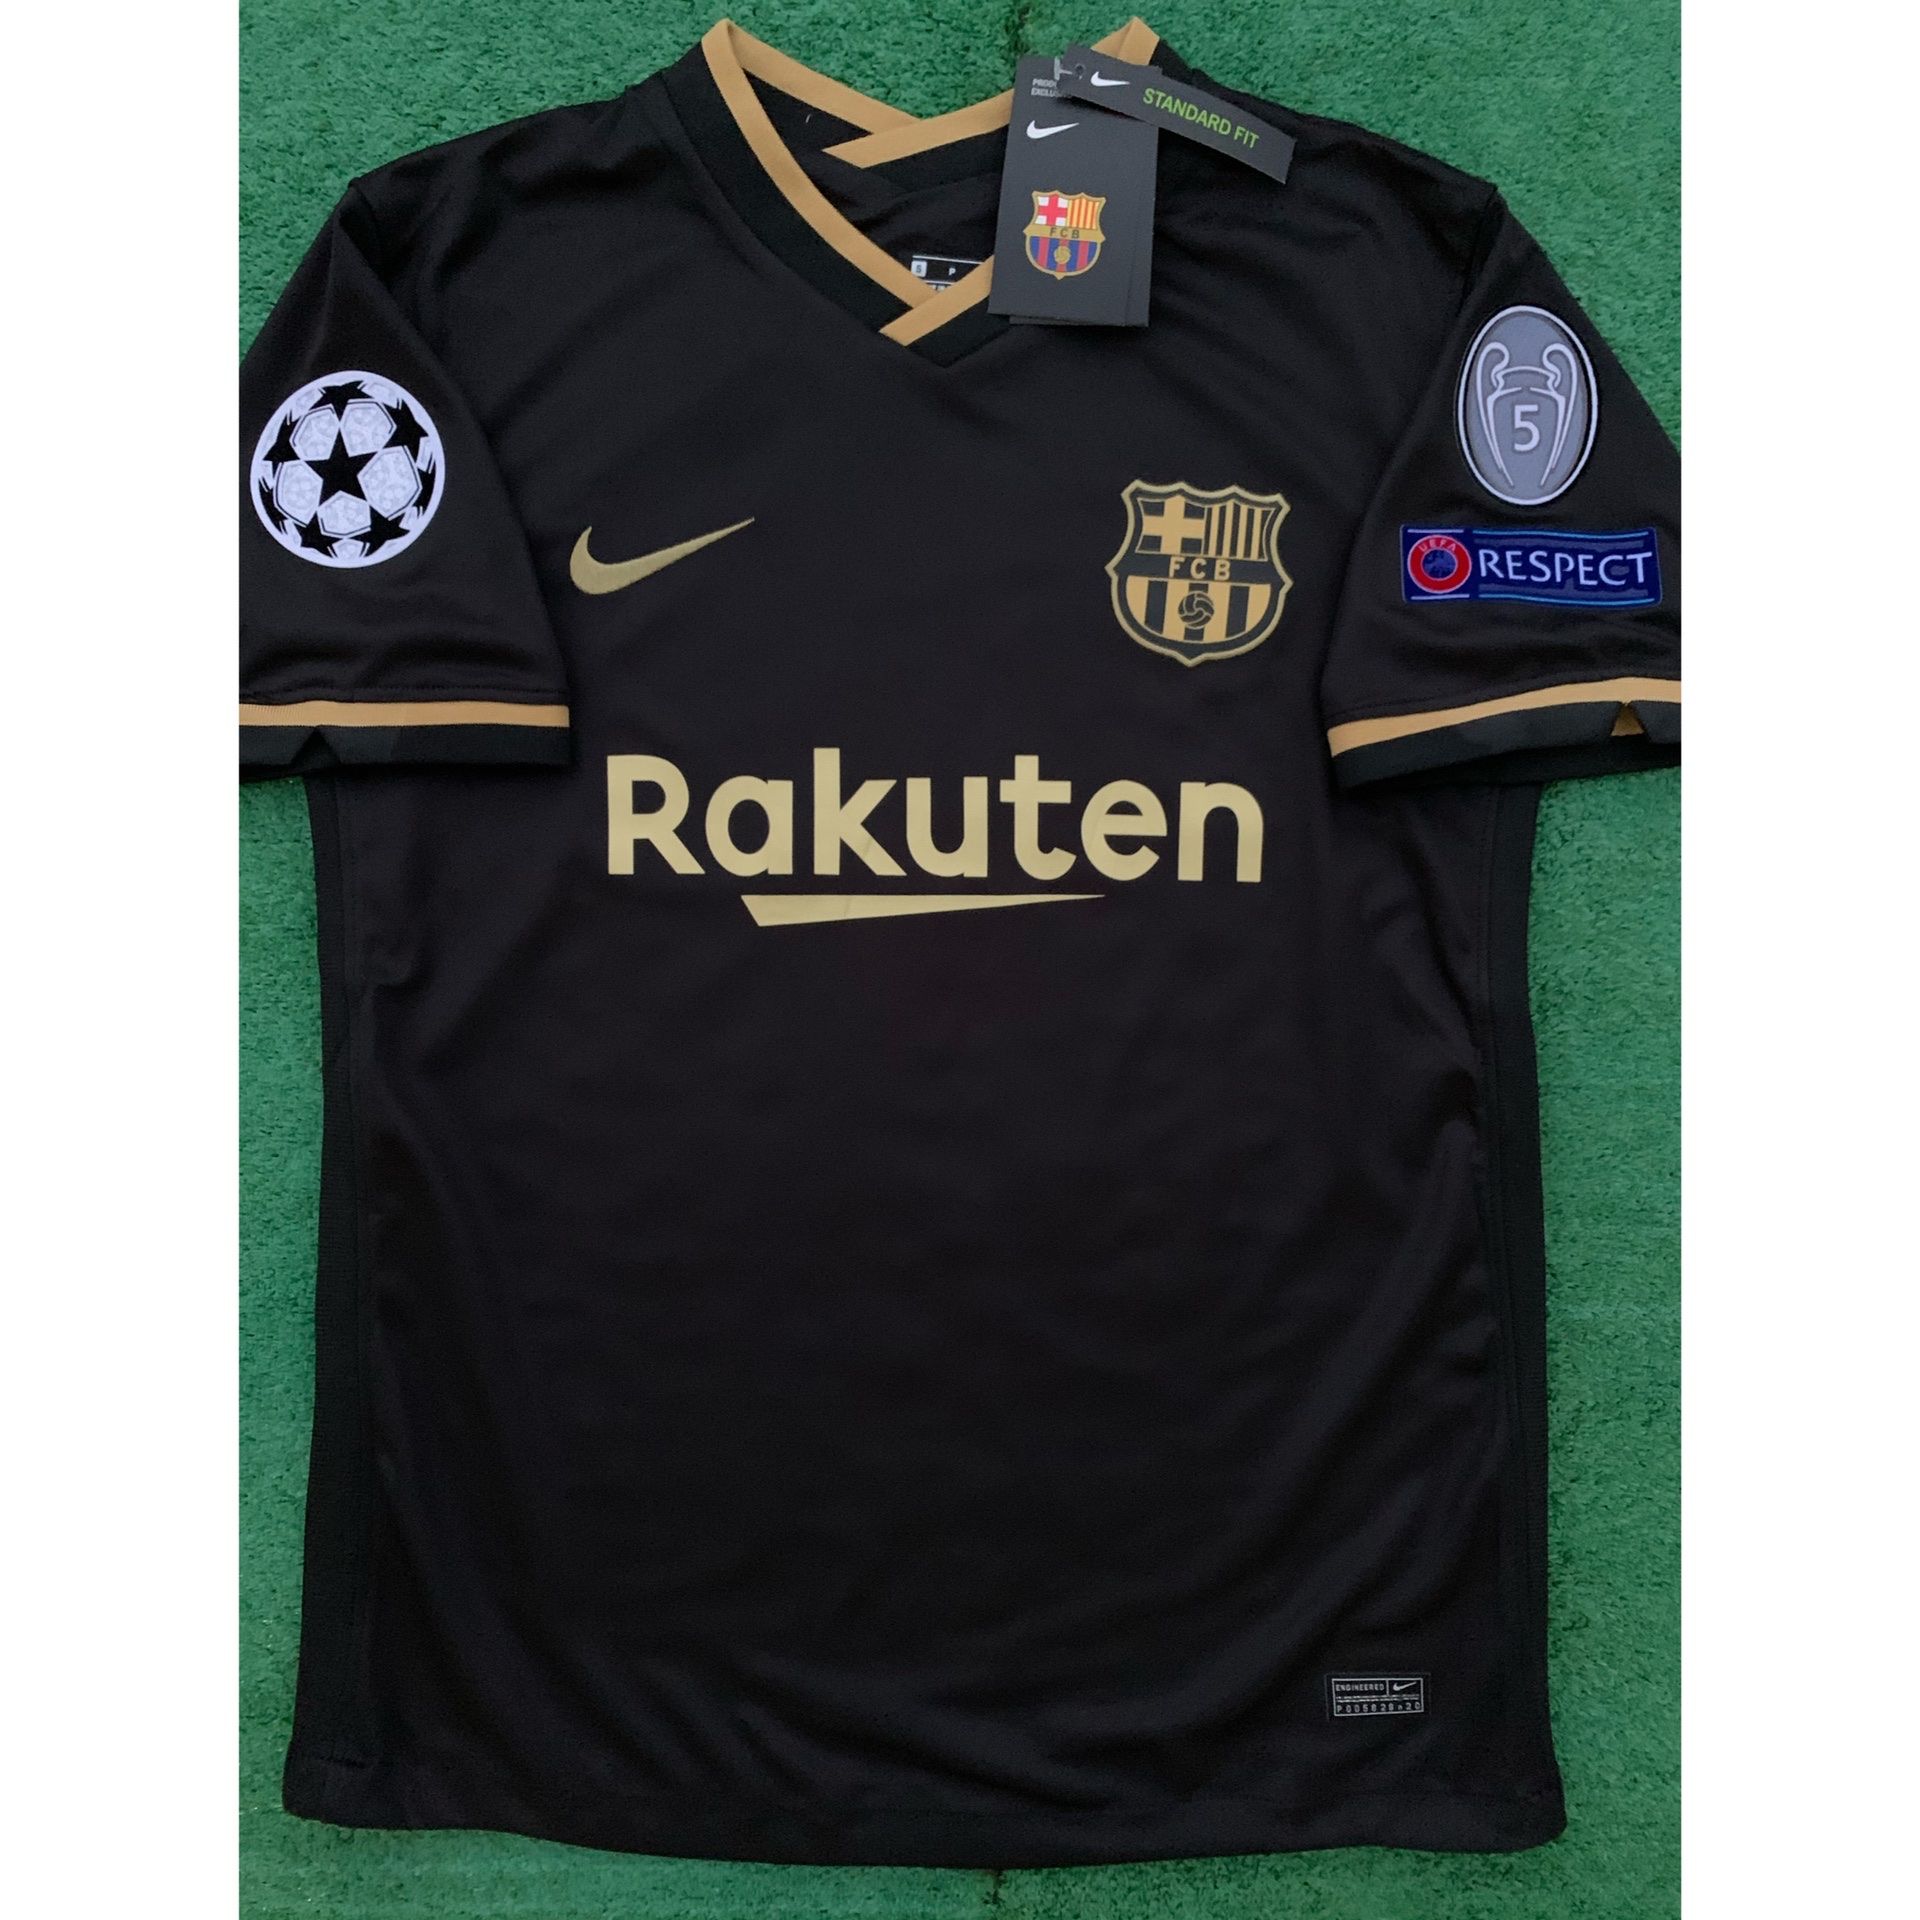 2020/21 FC Barcelona away soccer jersey